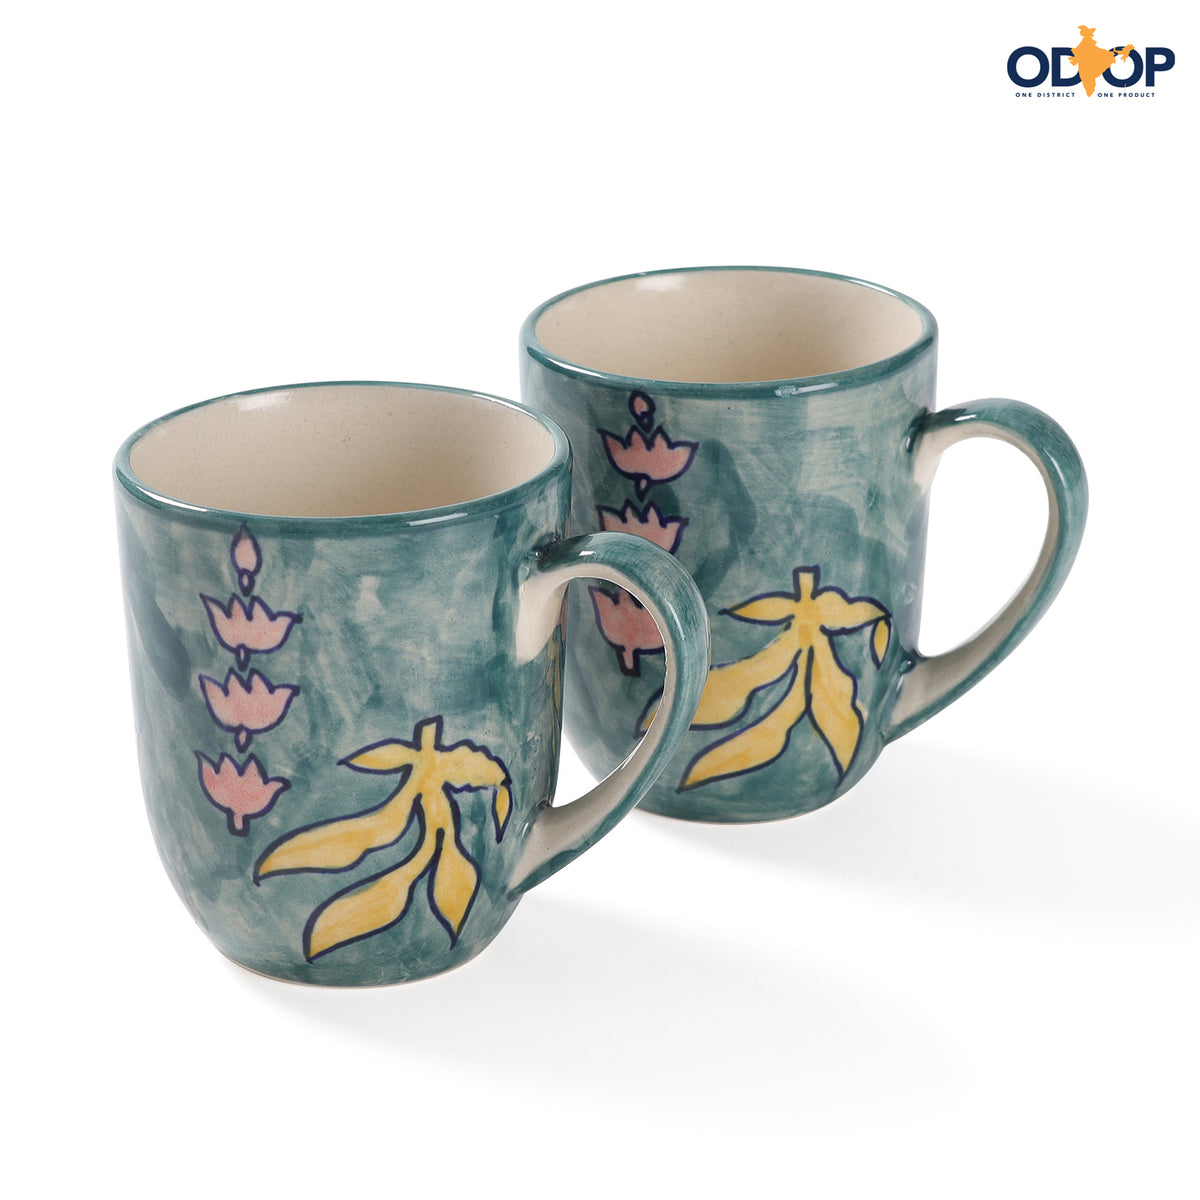 Handpainted Ceramic Mugs - Set of 2